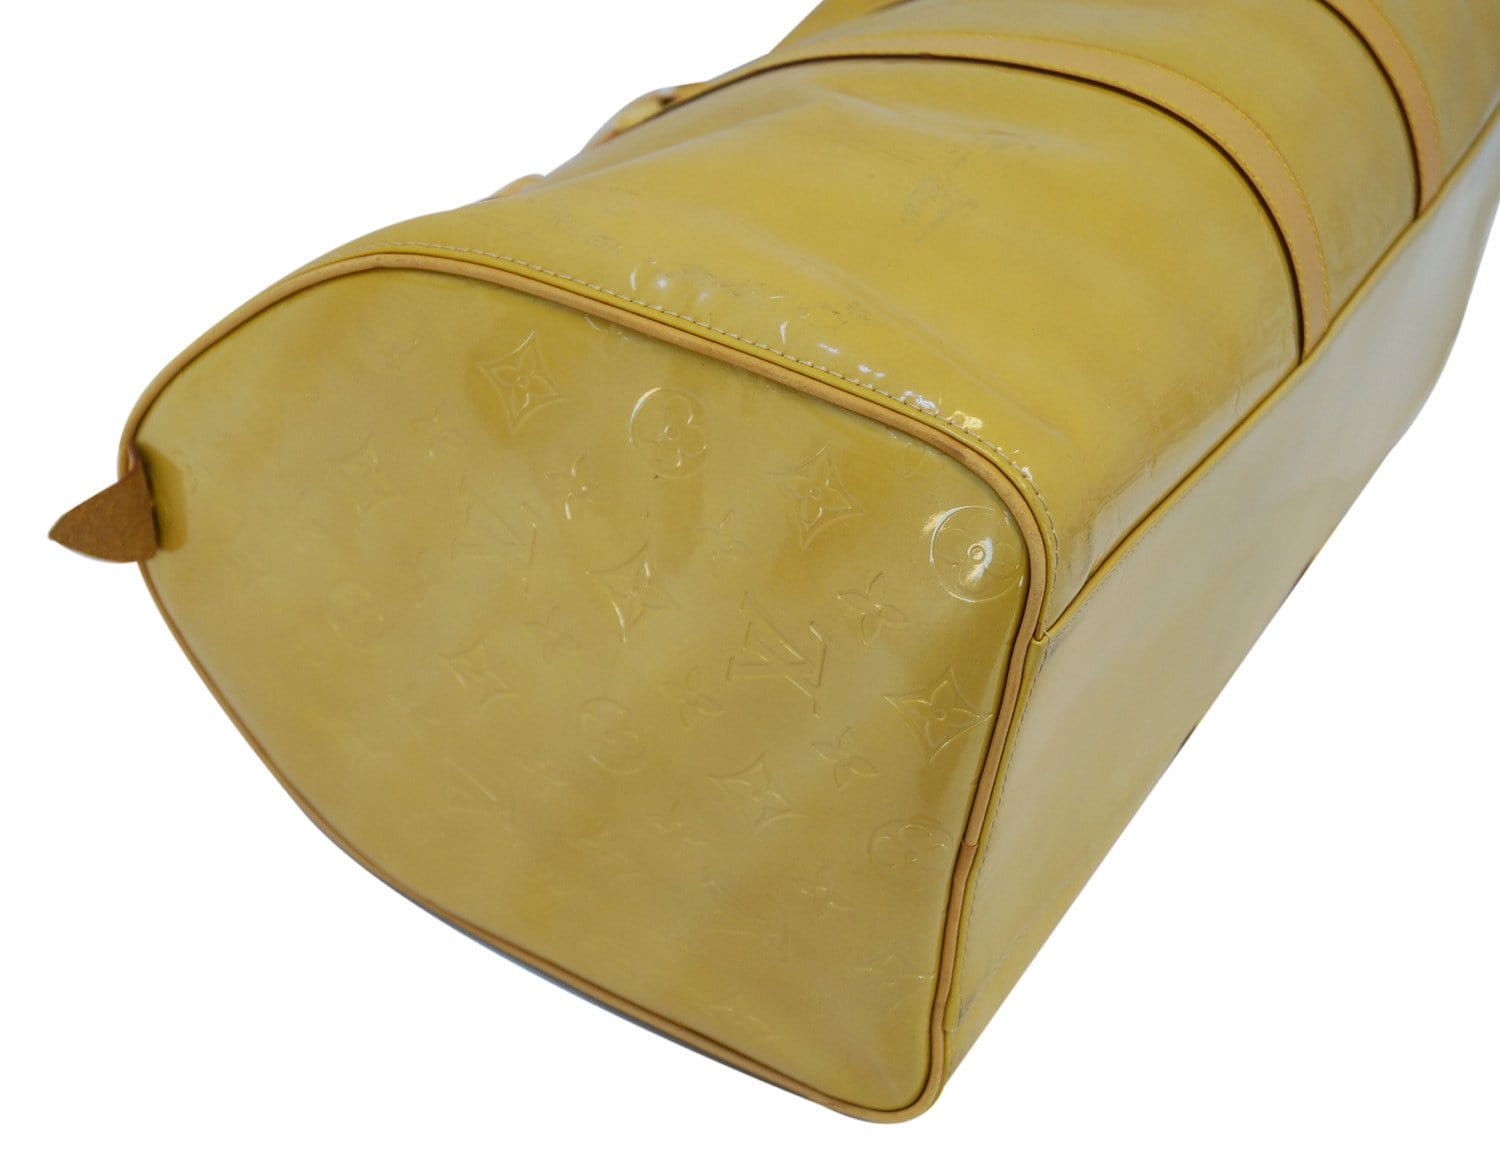 Louis Vuitton Yellow Monogram Vernis Mercer Keepall Duffle Bag 23lz531sW, Women's, Size: One Size